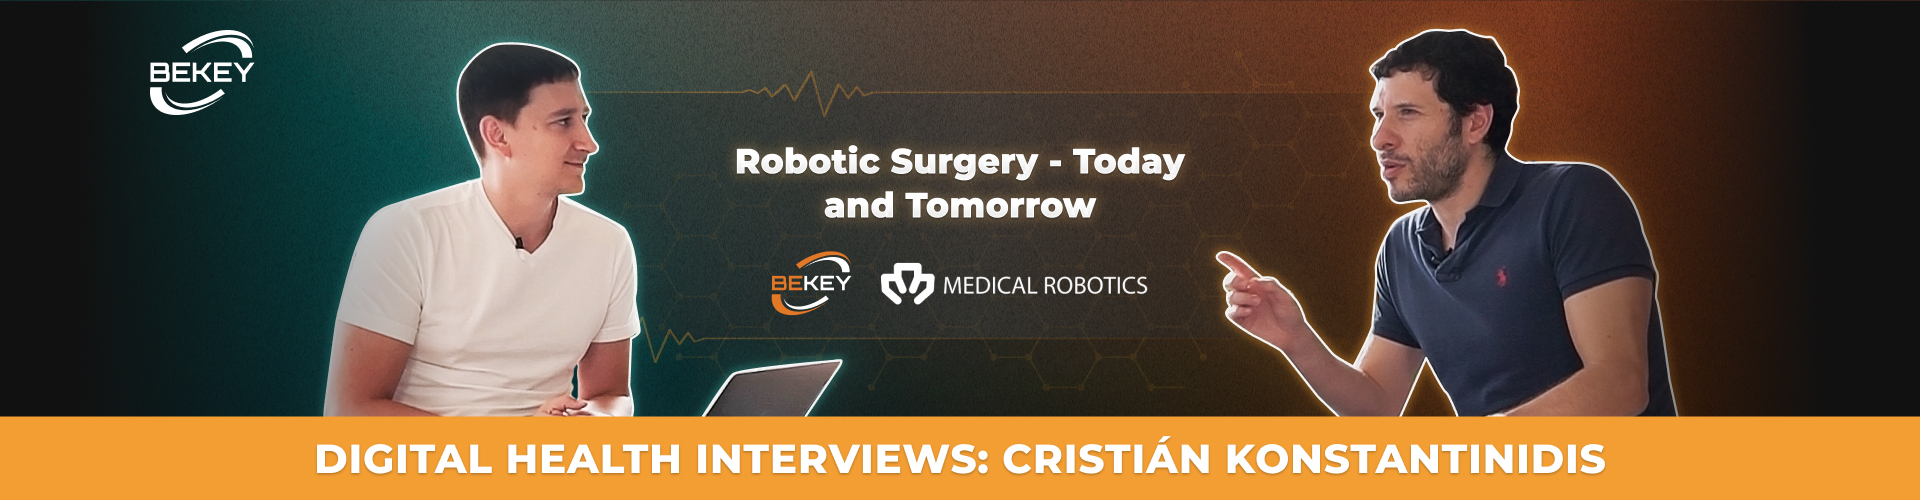 Robotic Surgery — Today and Tomorrow. Digital Health Interviews: Cristián Konstantinidis - image